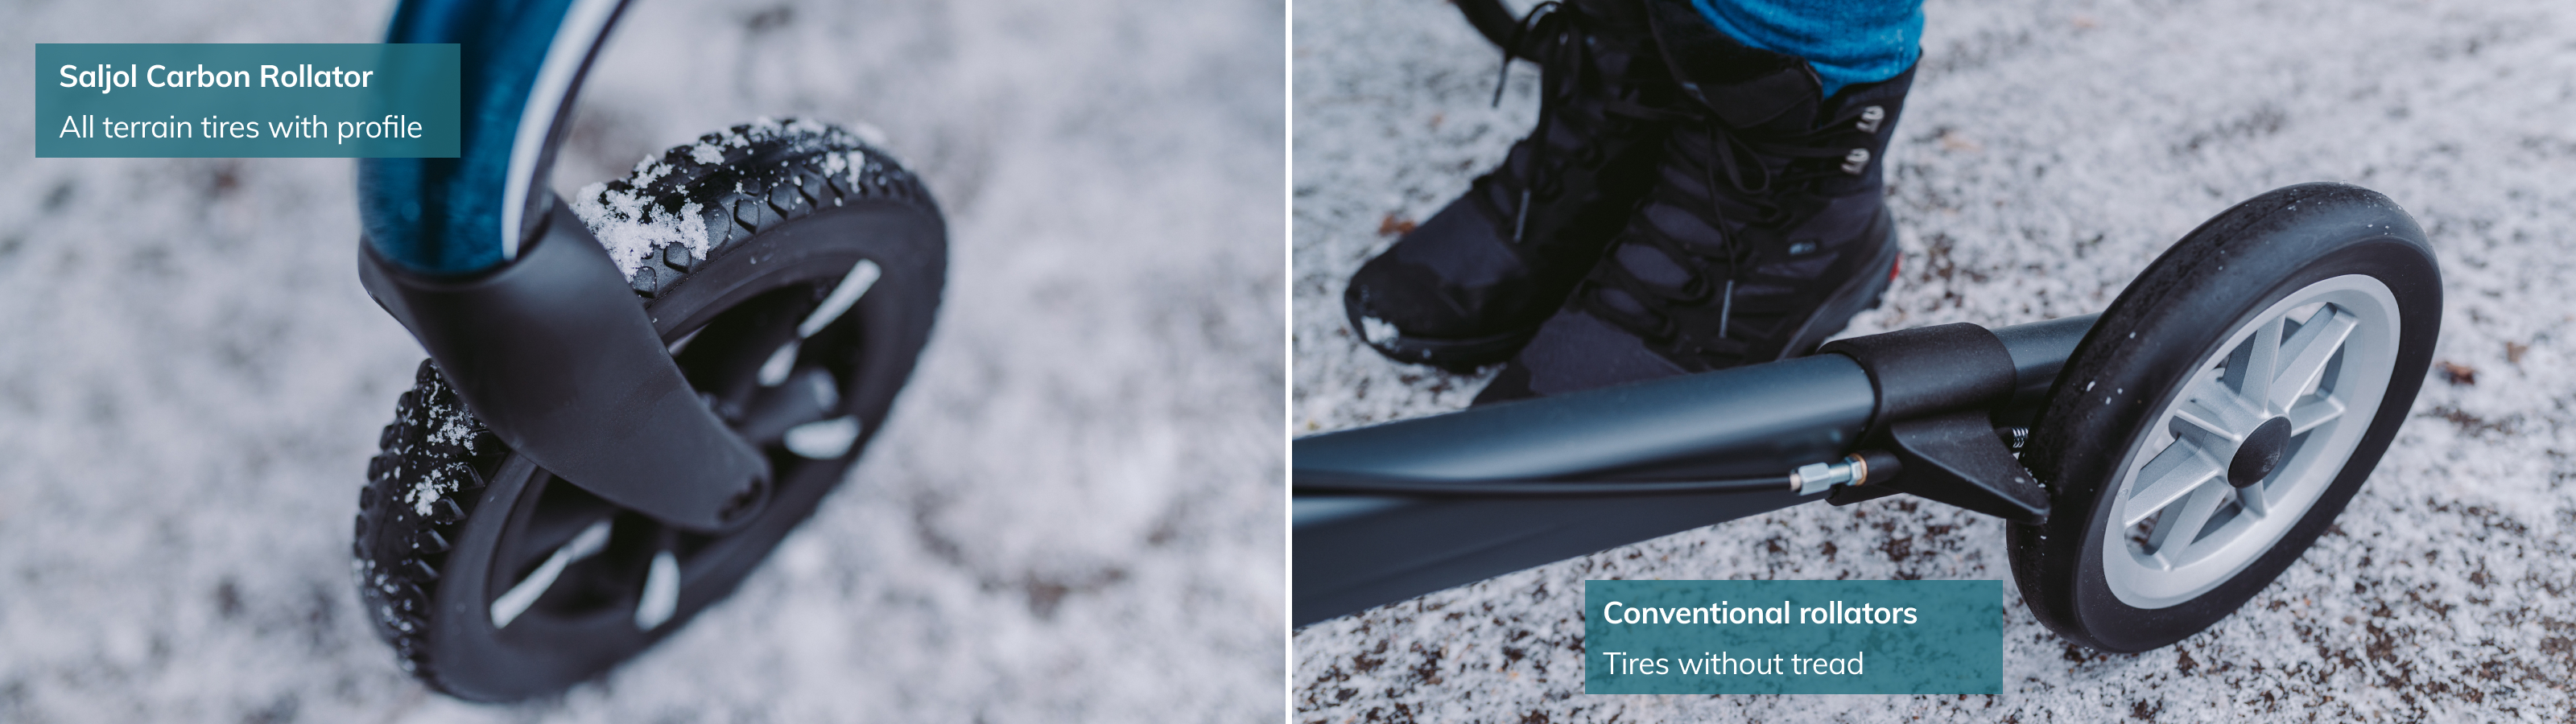 carbon-rollator-winter-snow-comparison-tires